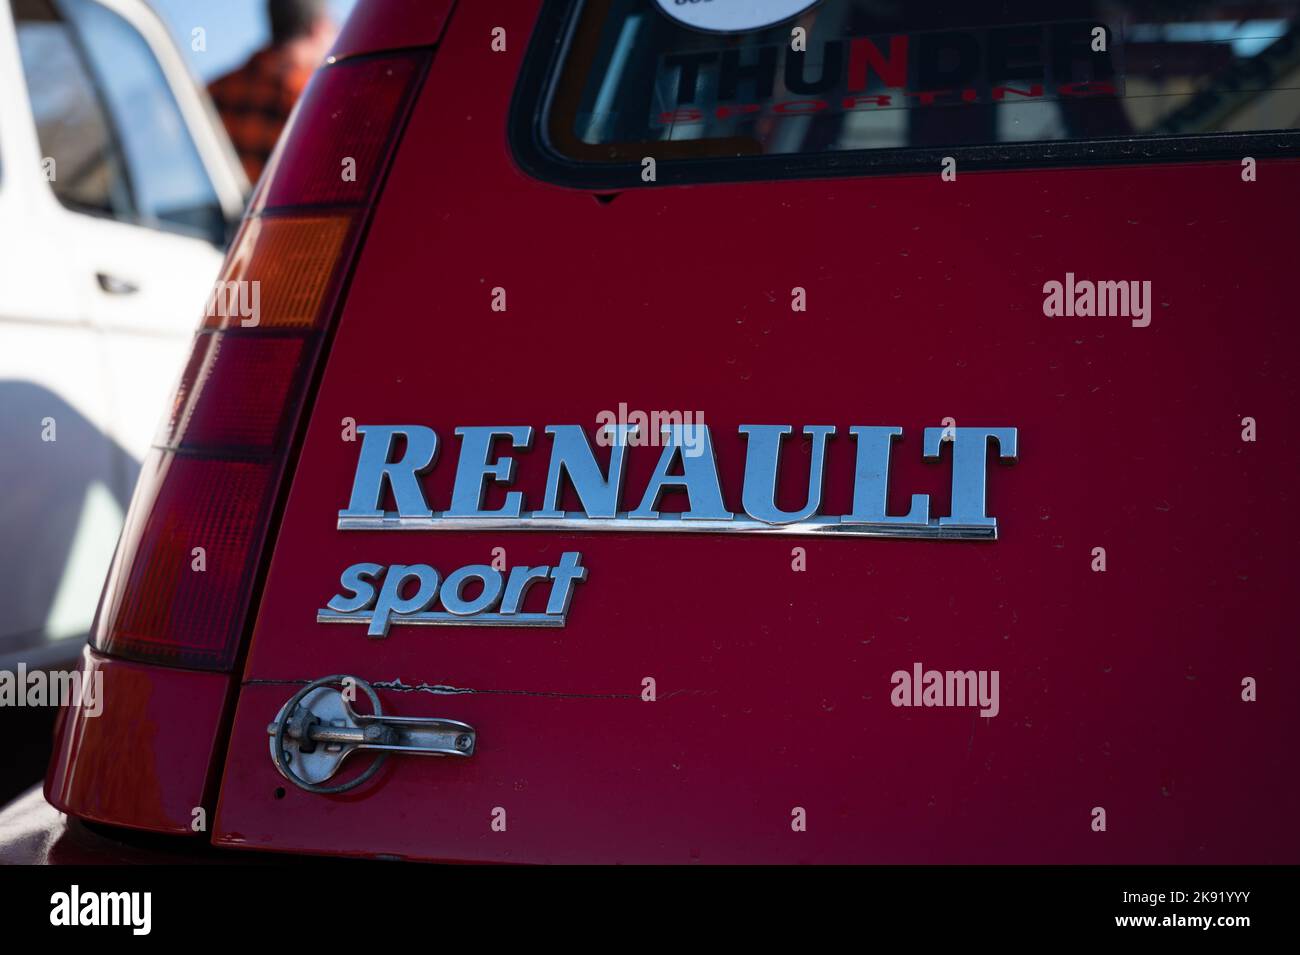 Stickers autocollant voiture logo Renault GT –